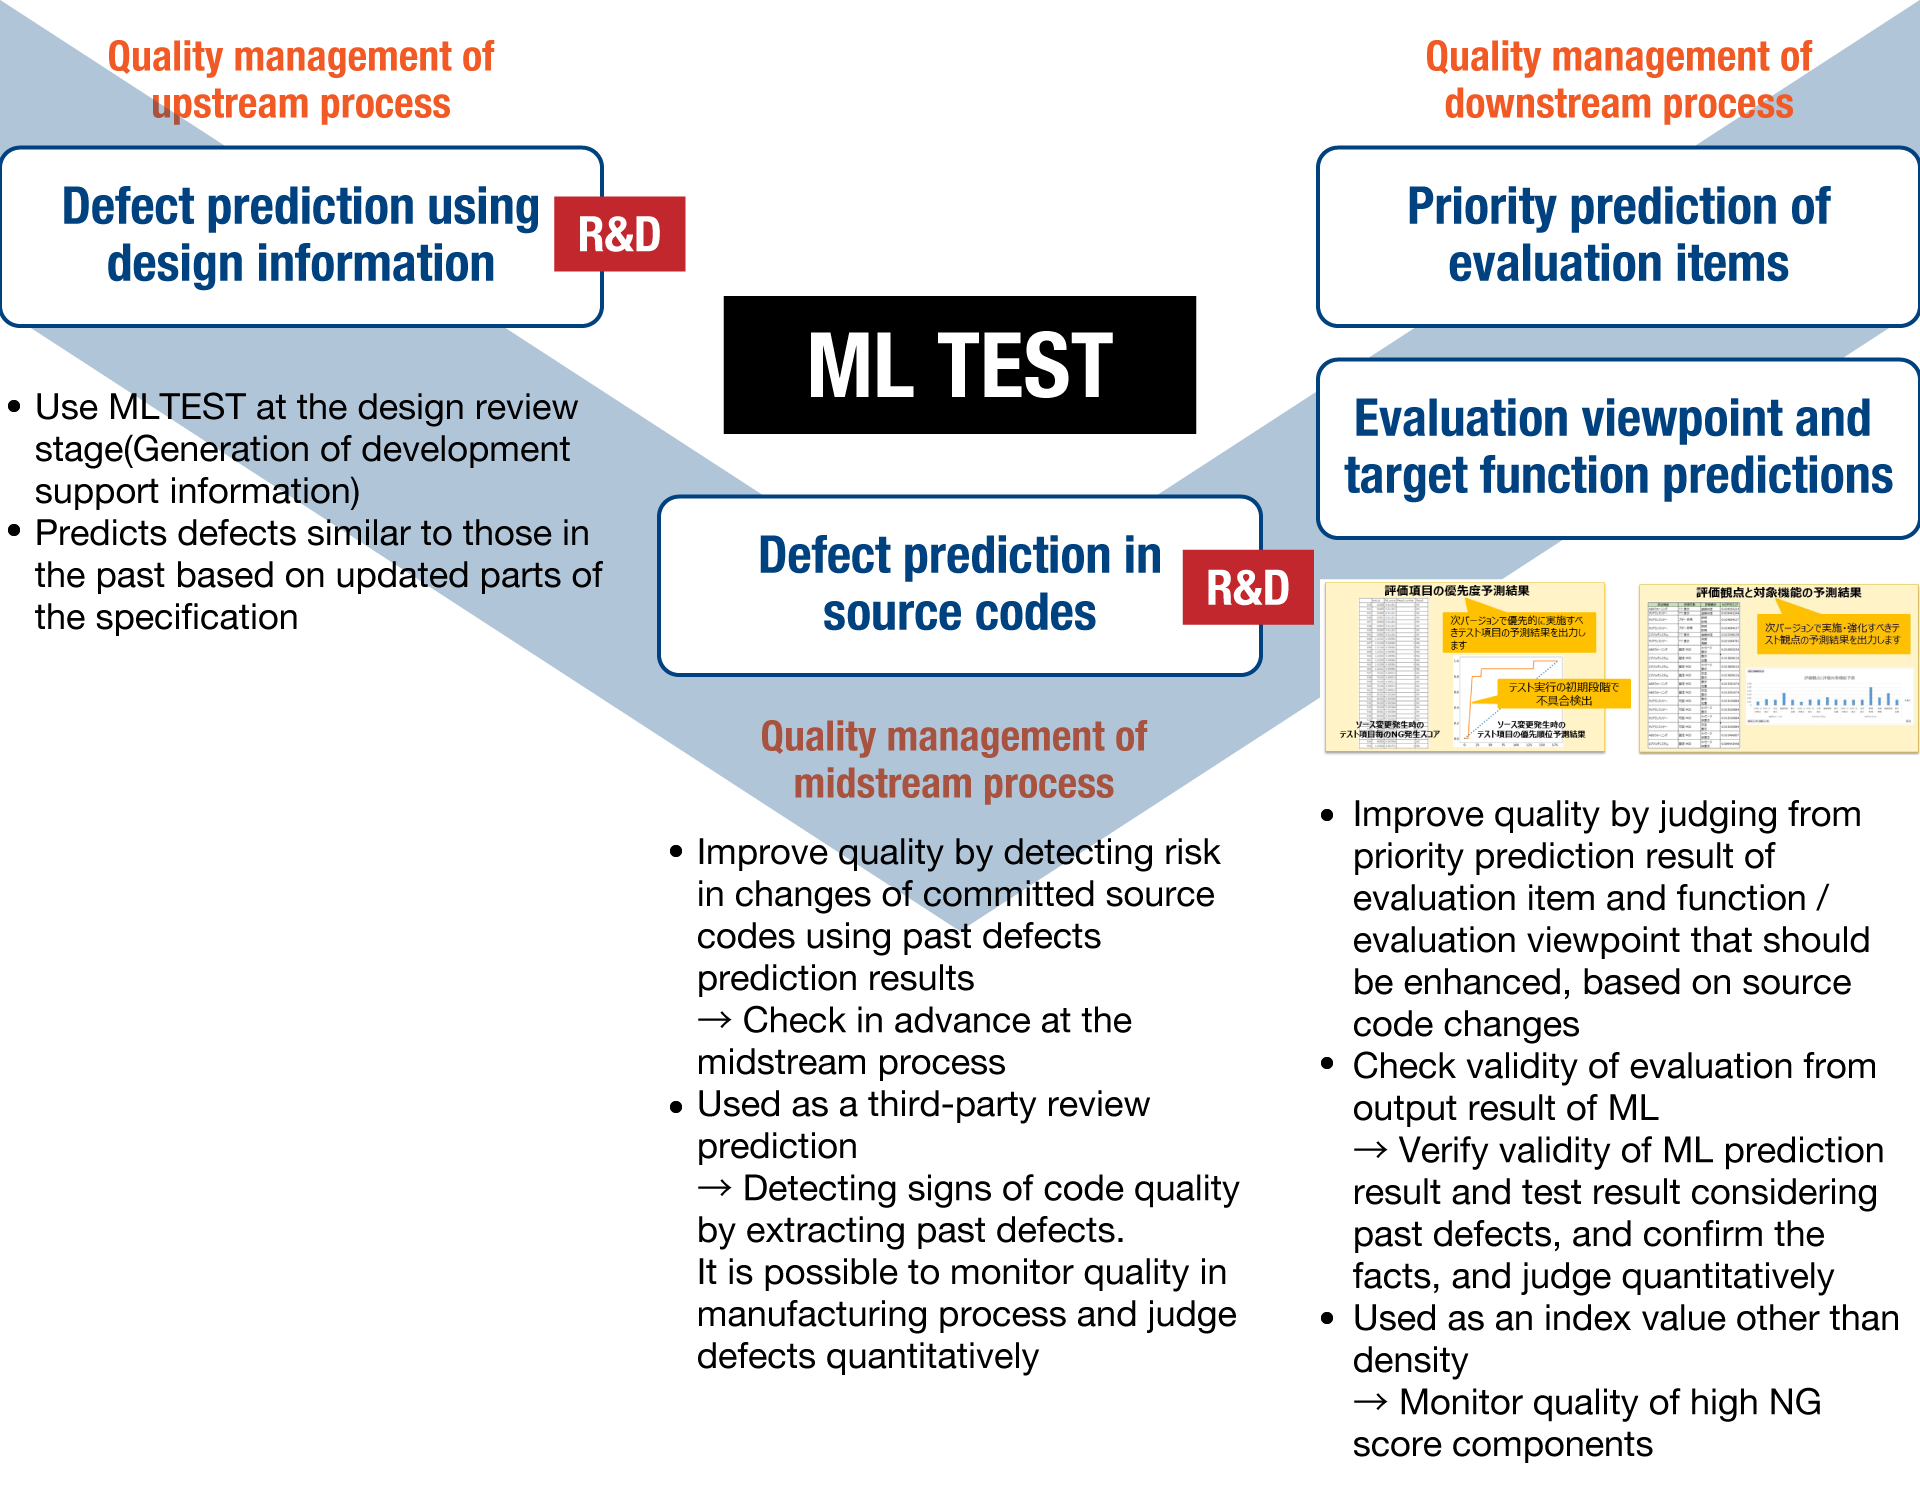 Future development of ML TEST